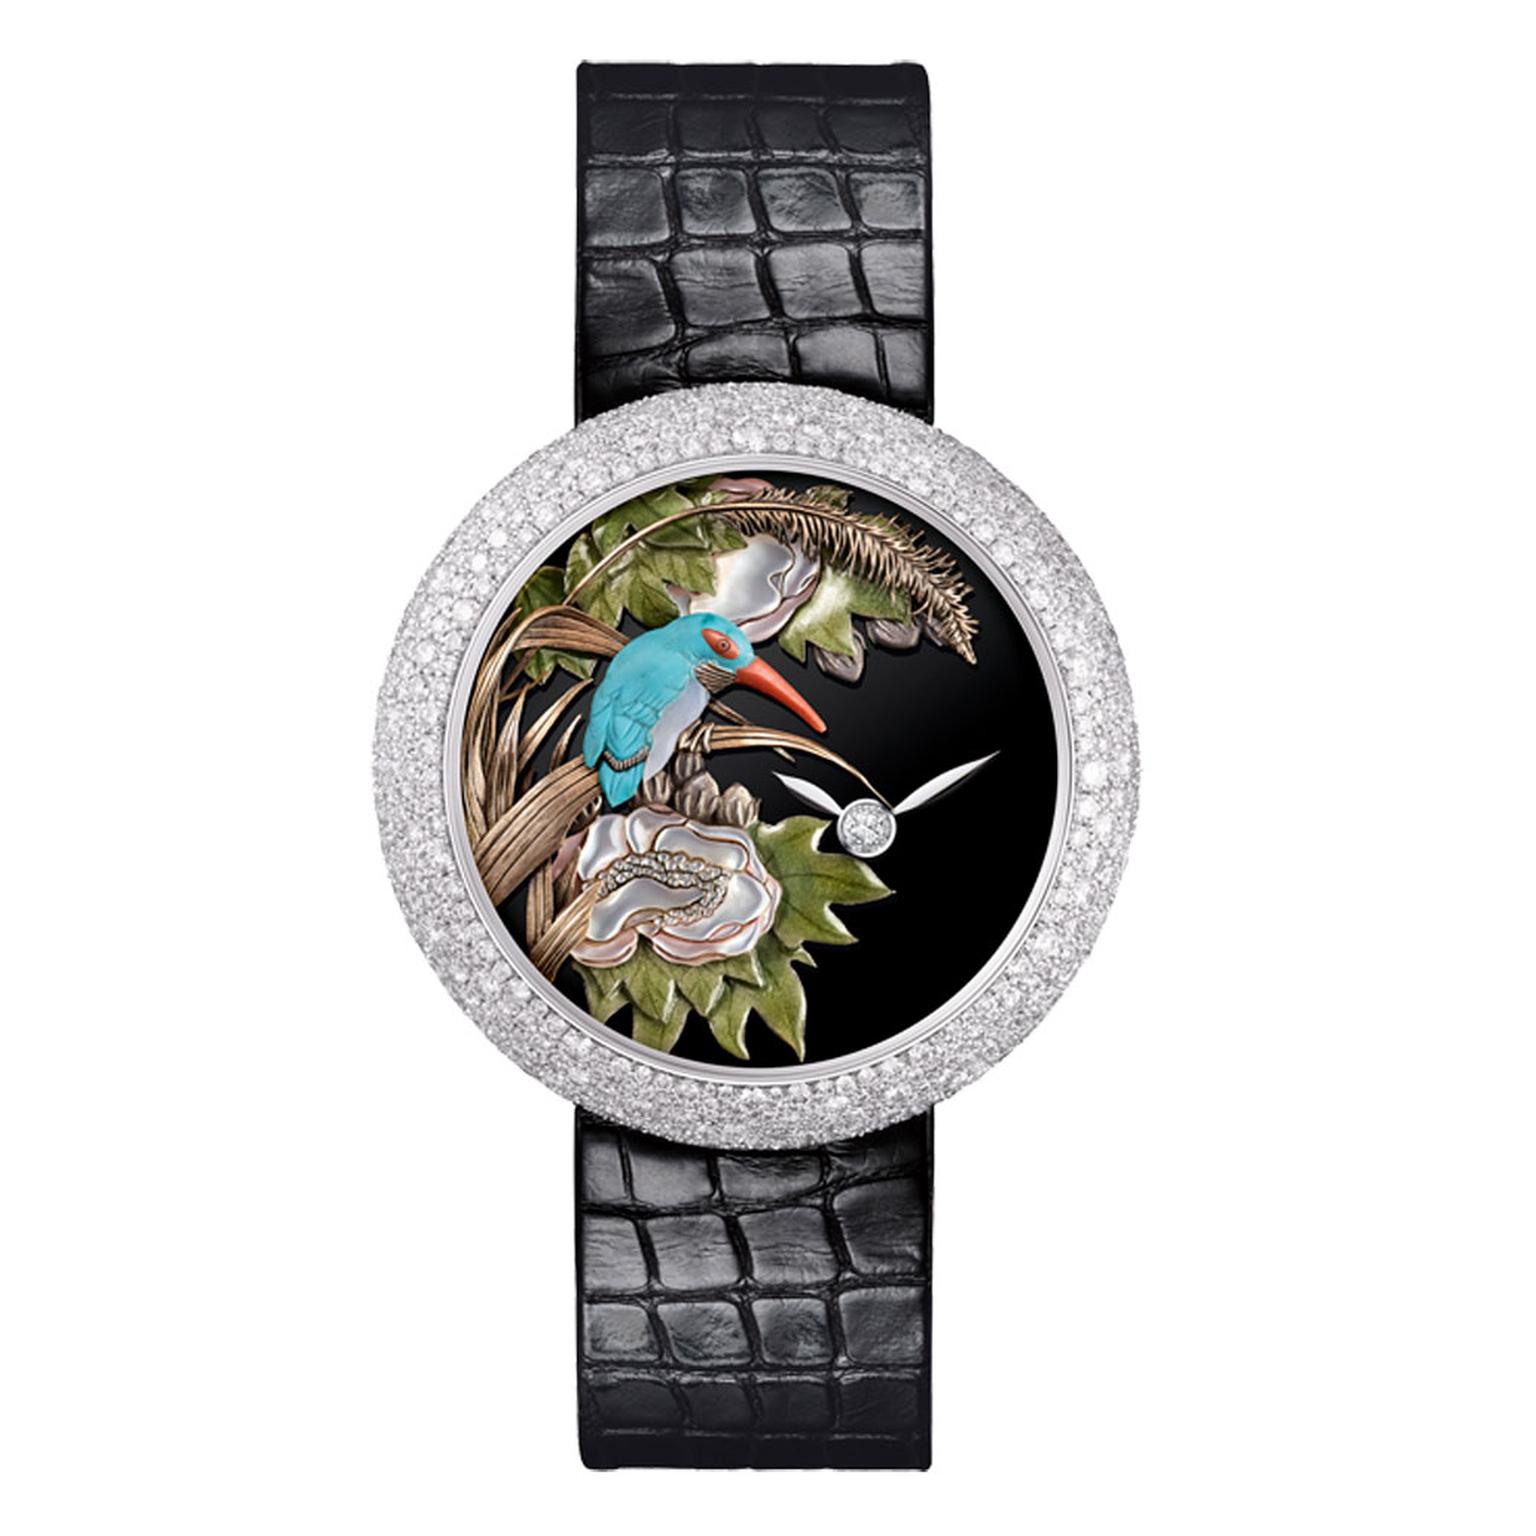 Chanel Mademoiselle Prive Coromandel Glyptic watch